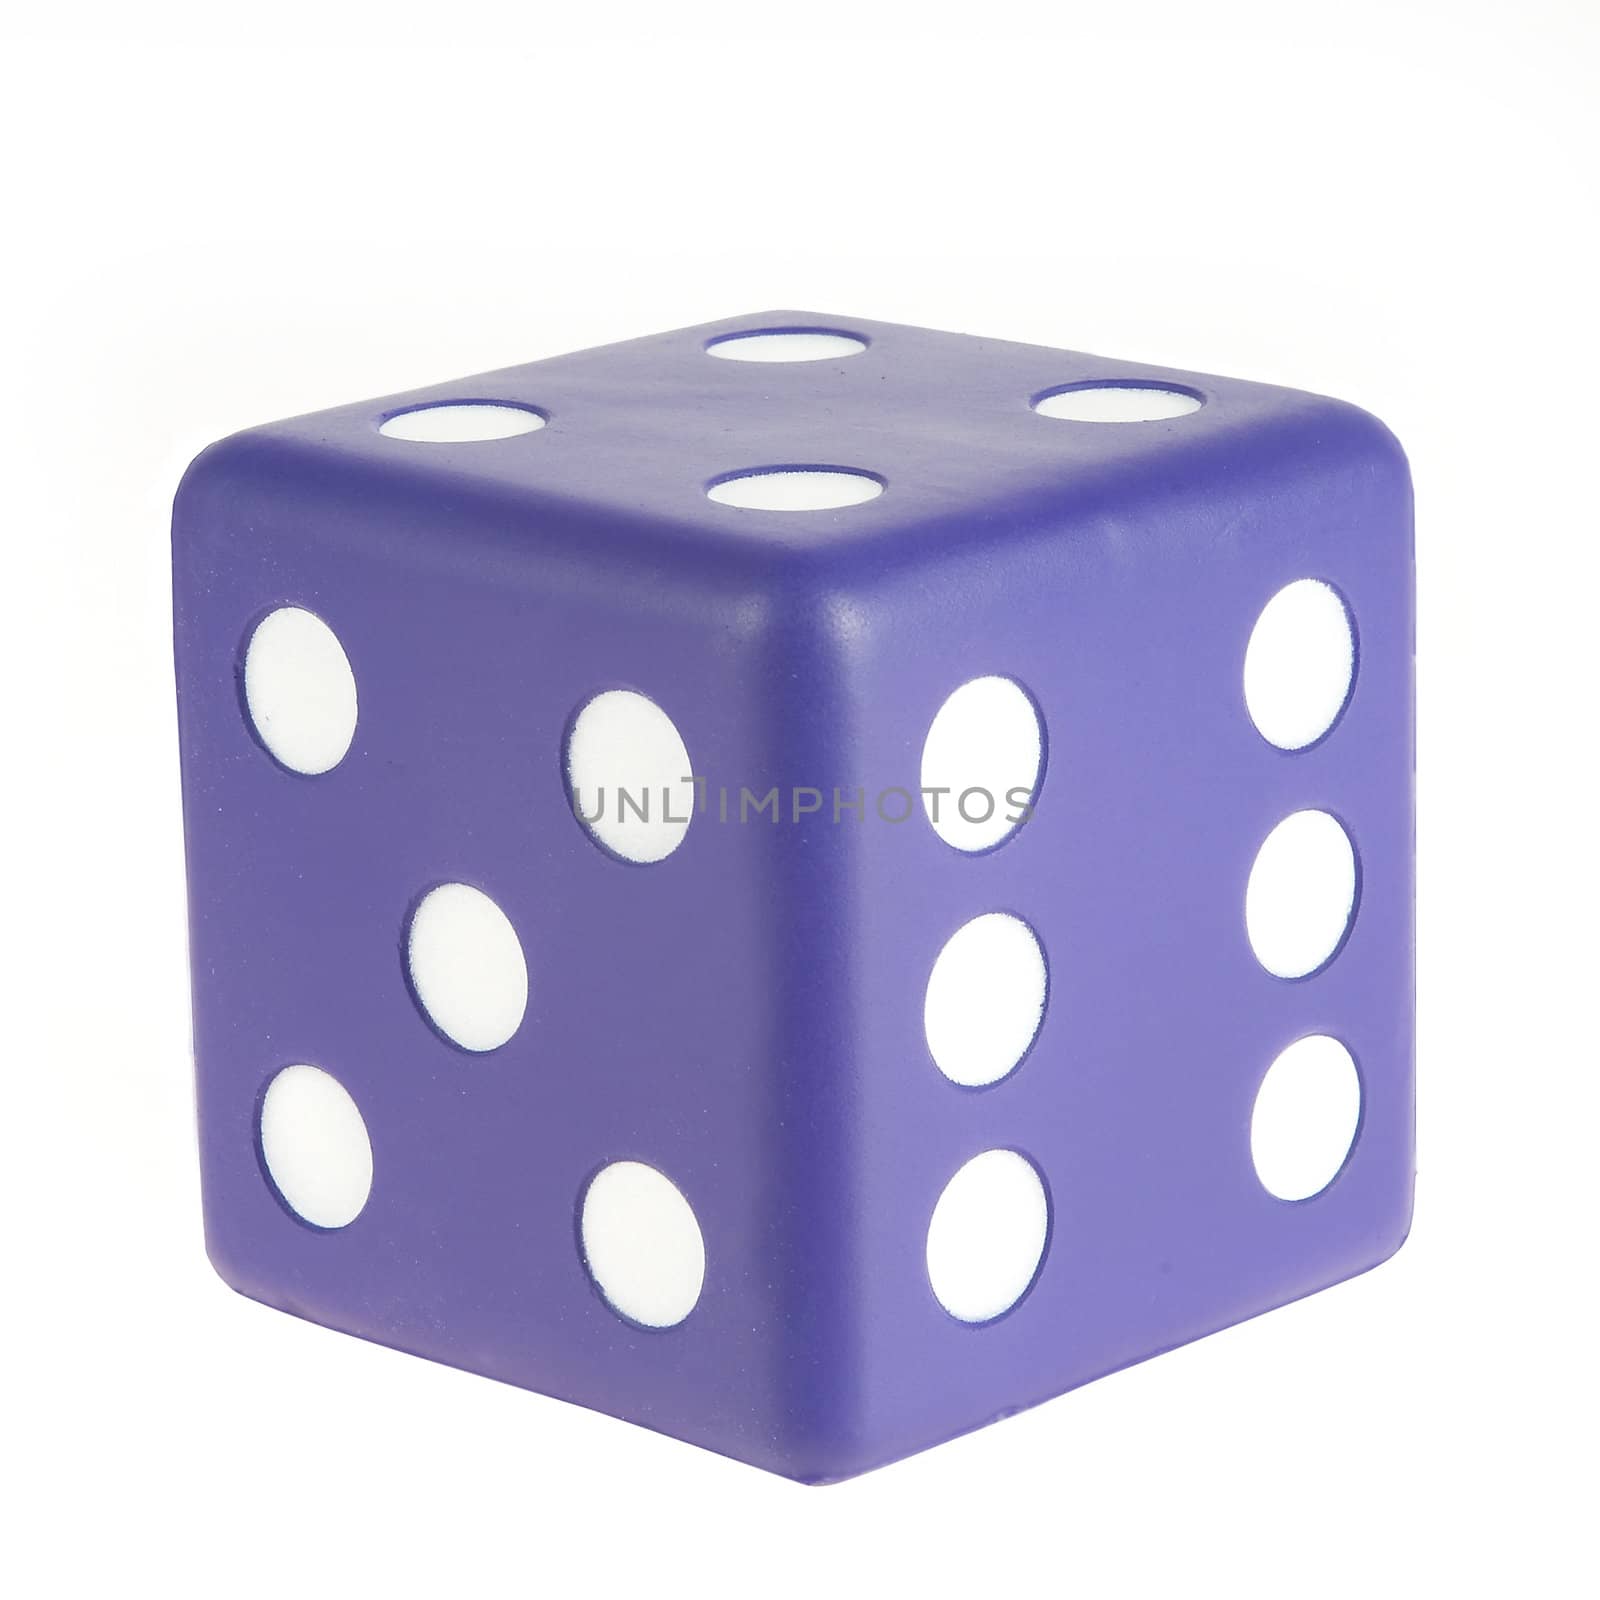 a big purple dice on white